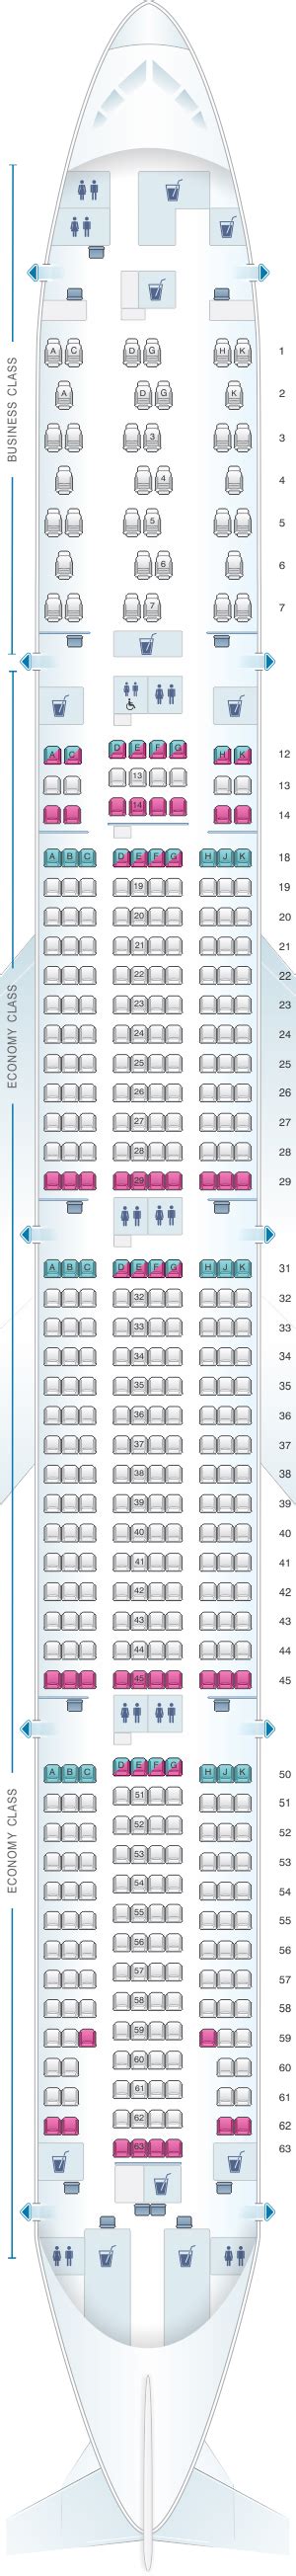 Air Canada 777 300er Seat Map Get Map Update